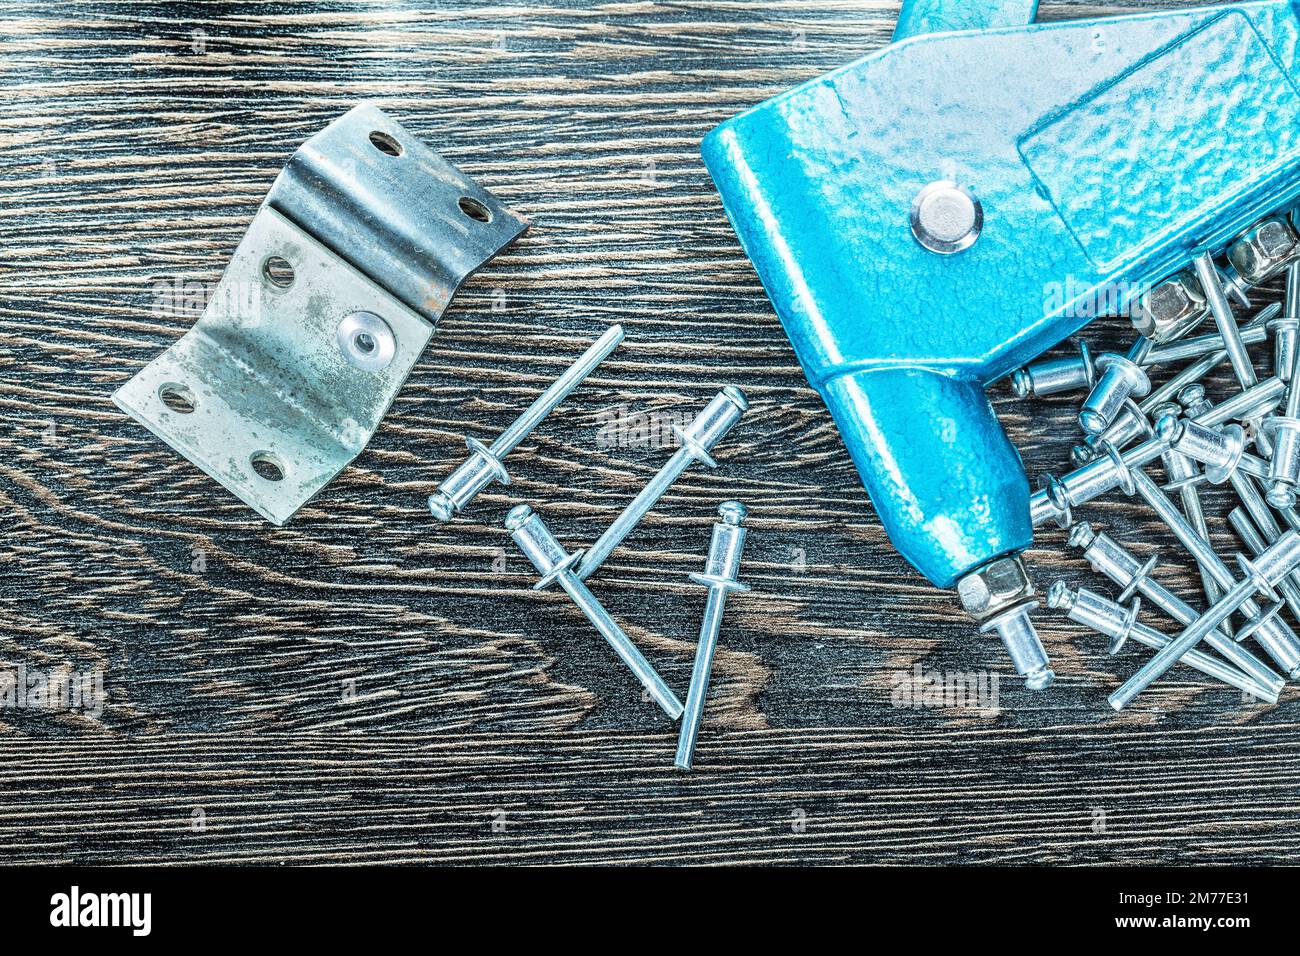 Riveting pliers rivets steel screws on wooden board. Stock Photo